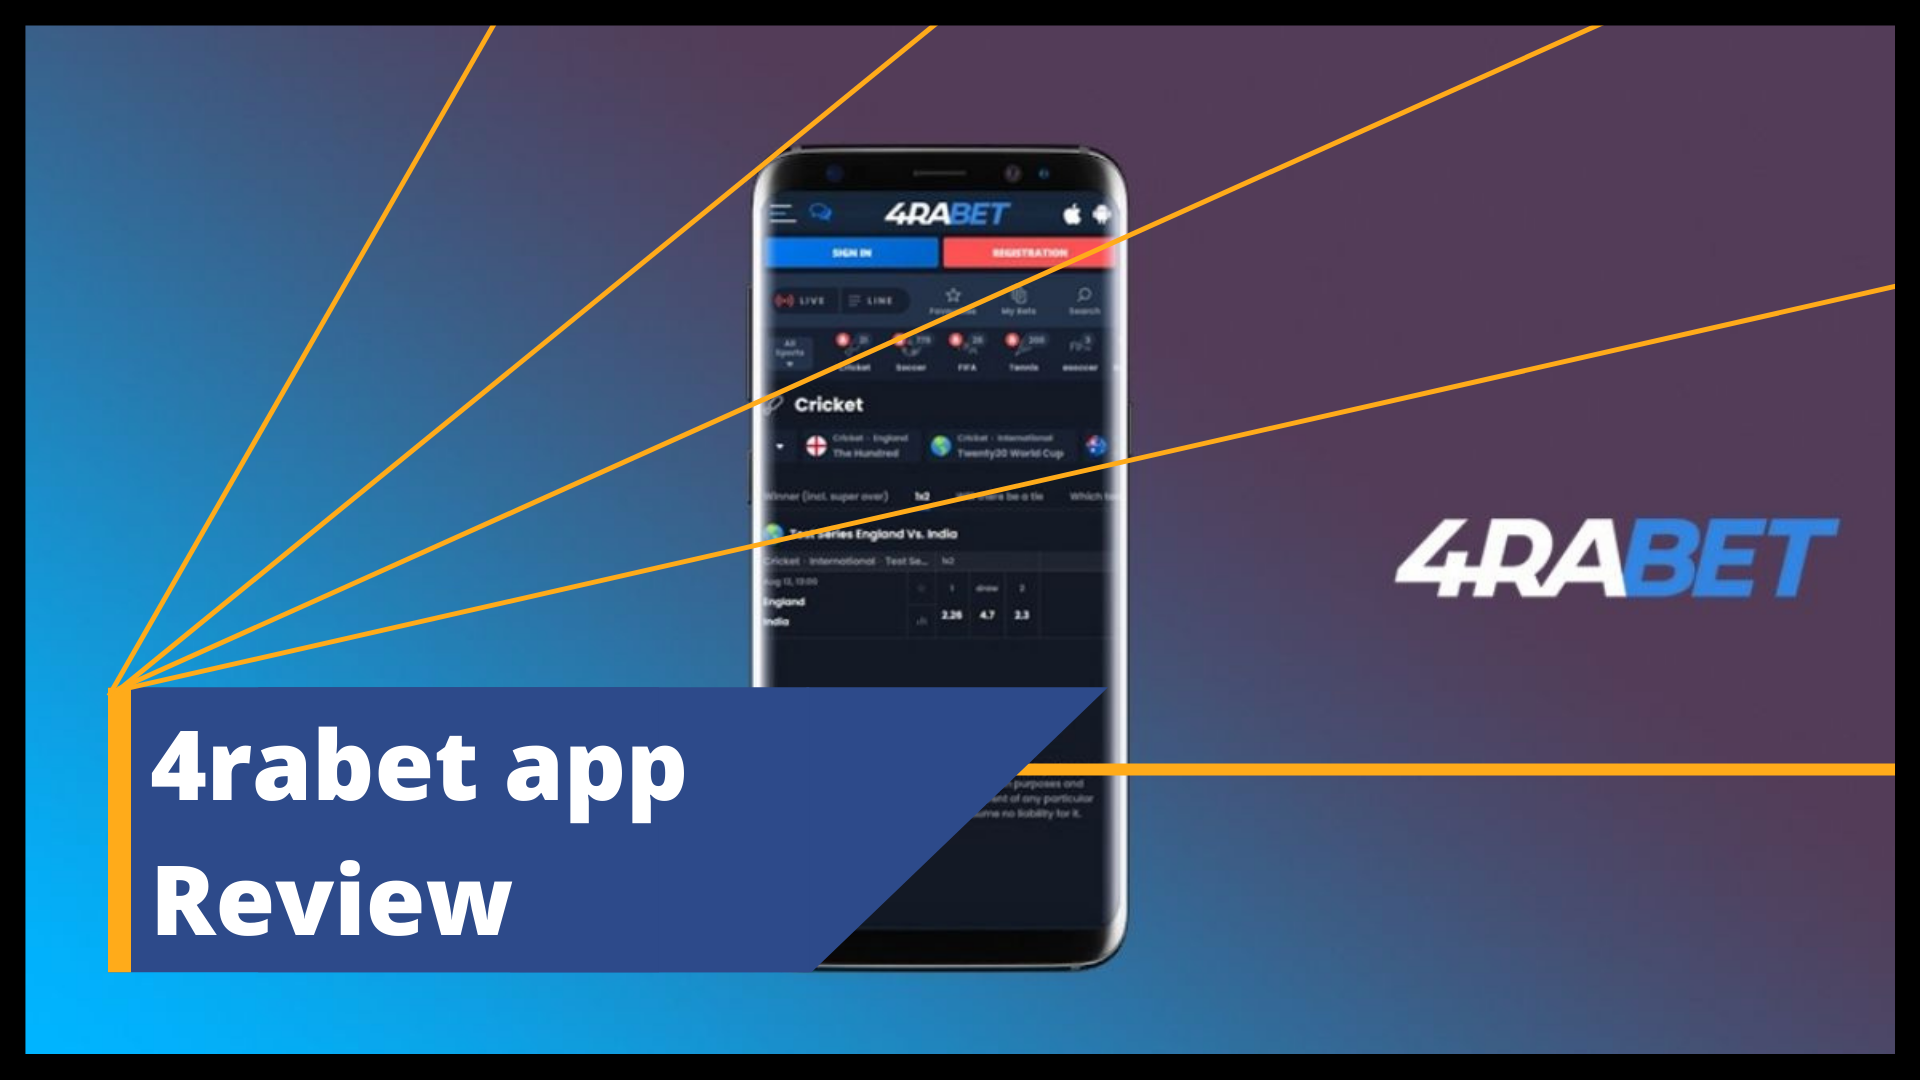 4raBet App Review